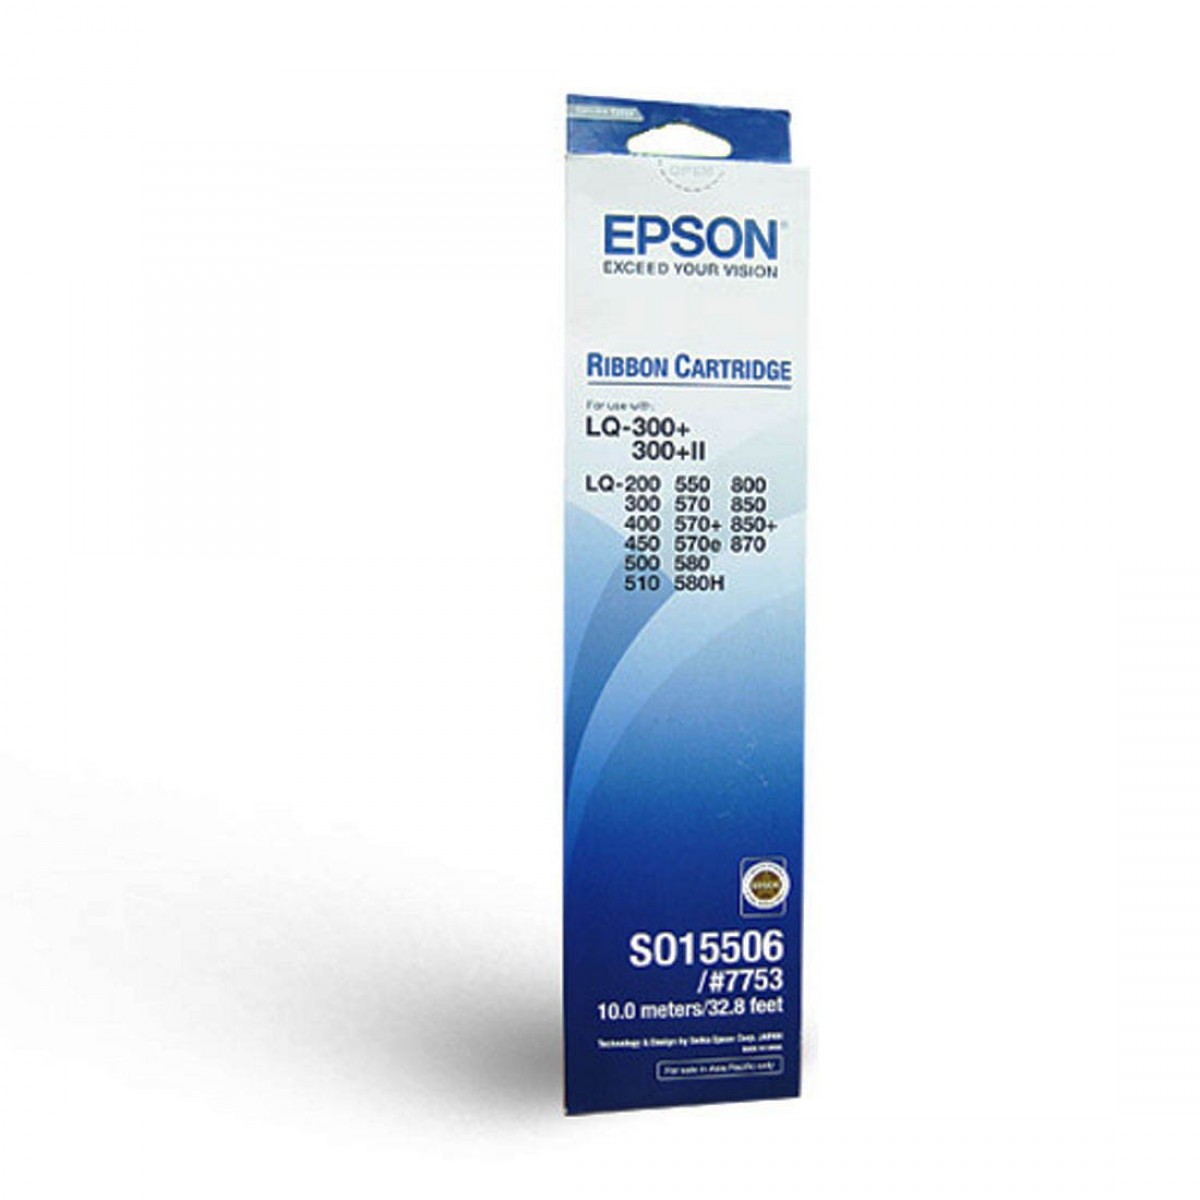 Ribbon Cartridge Epson LQ 300+